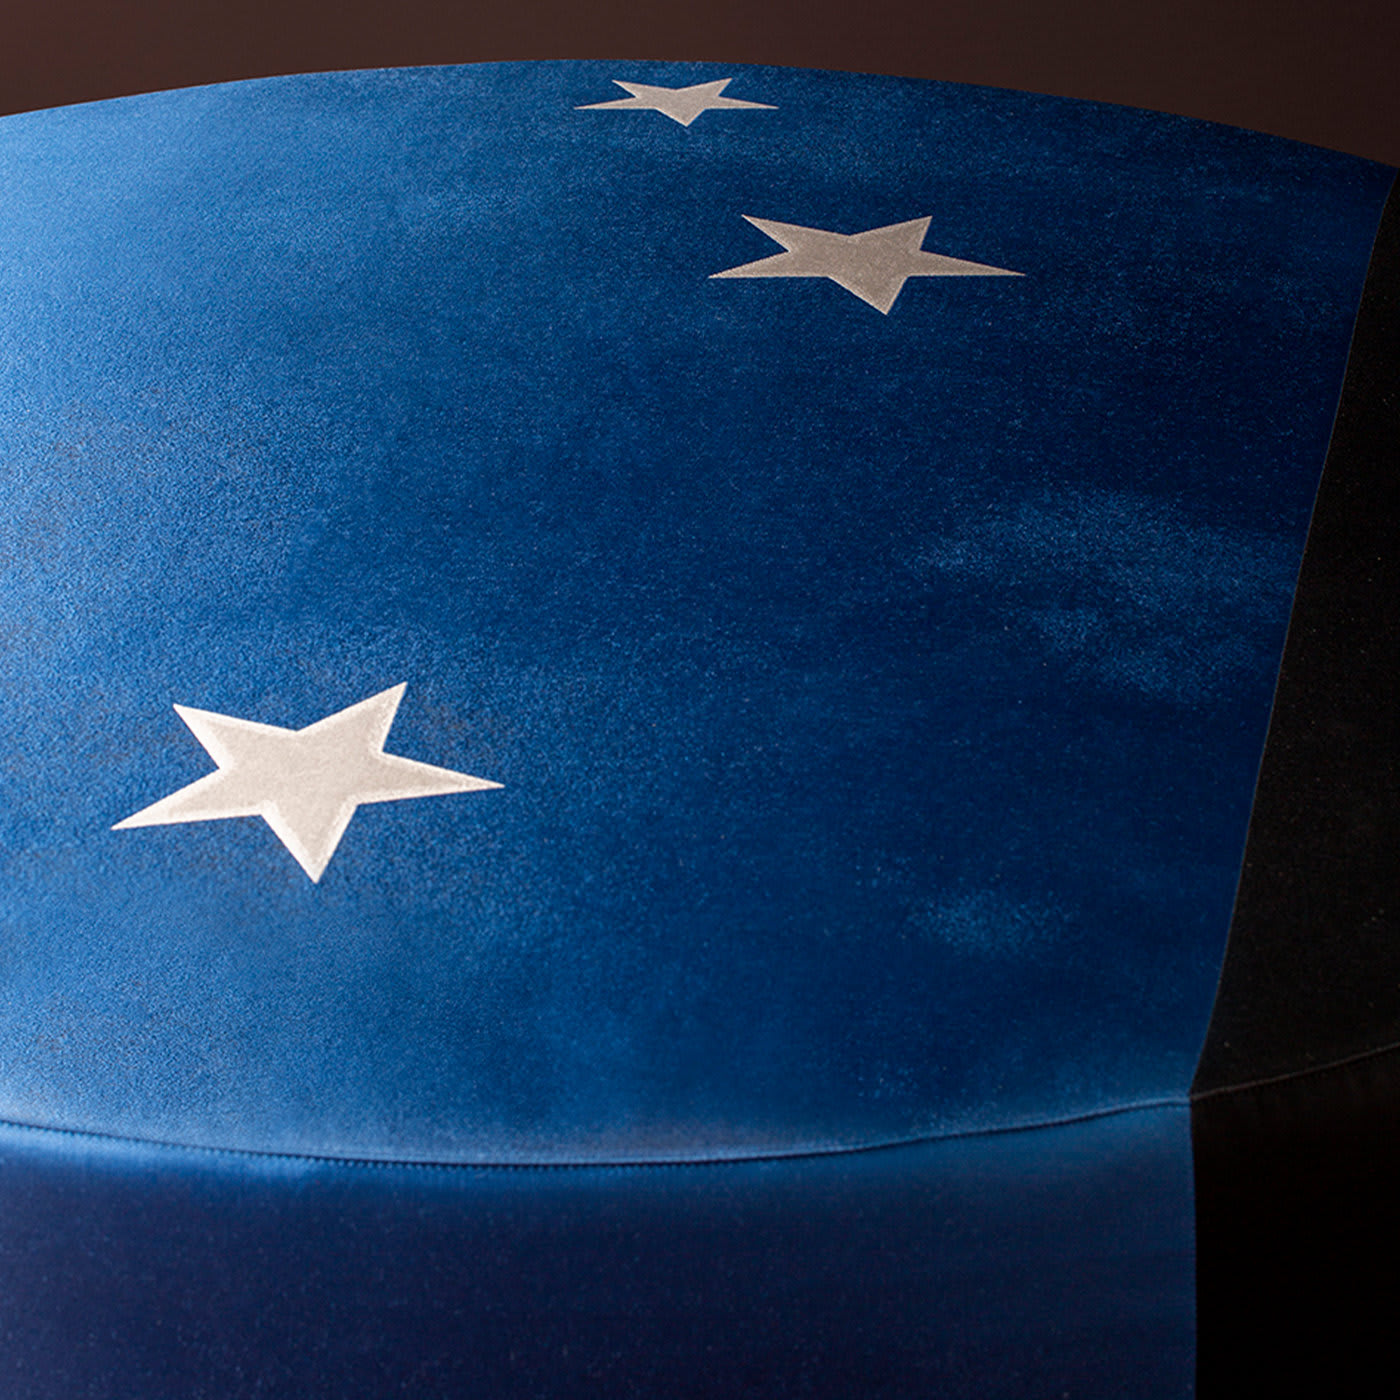 Parigi Large Blue Star Pouf by DimoreStudio - Dimoremilano